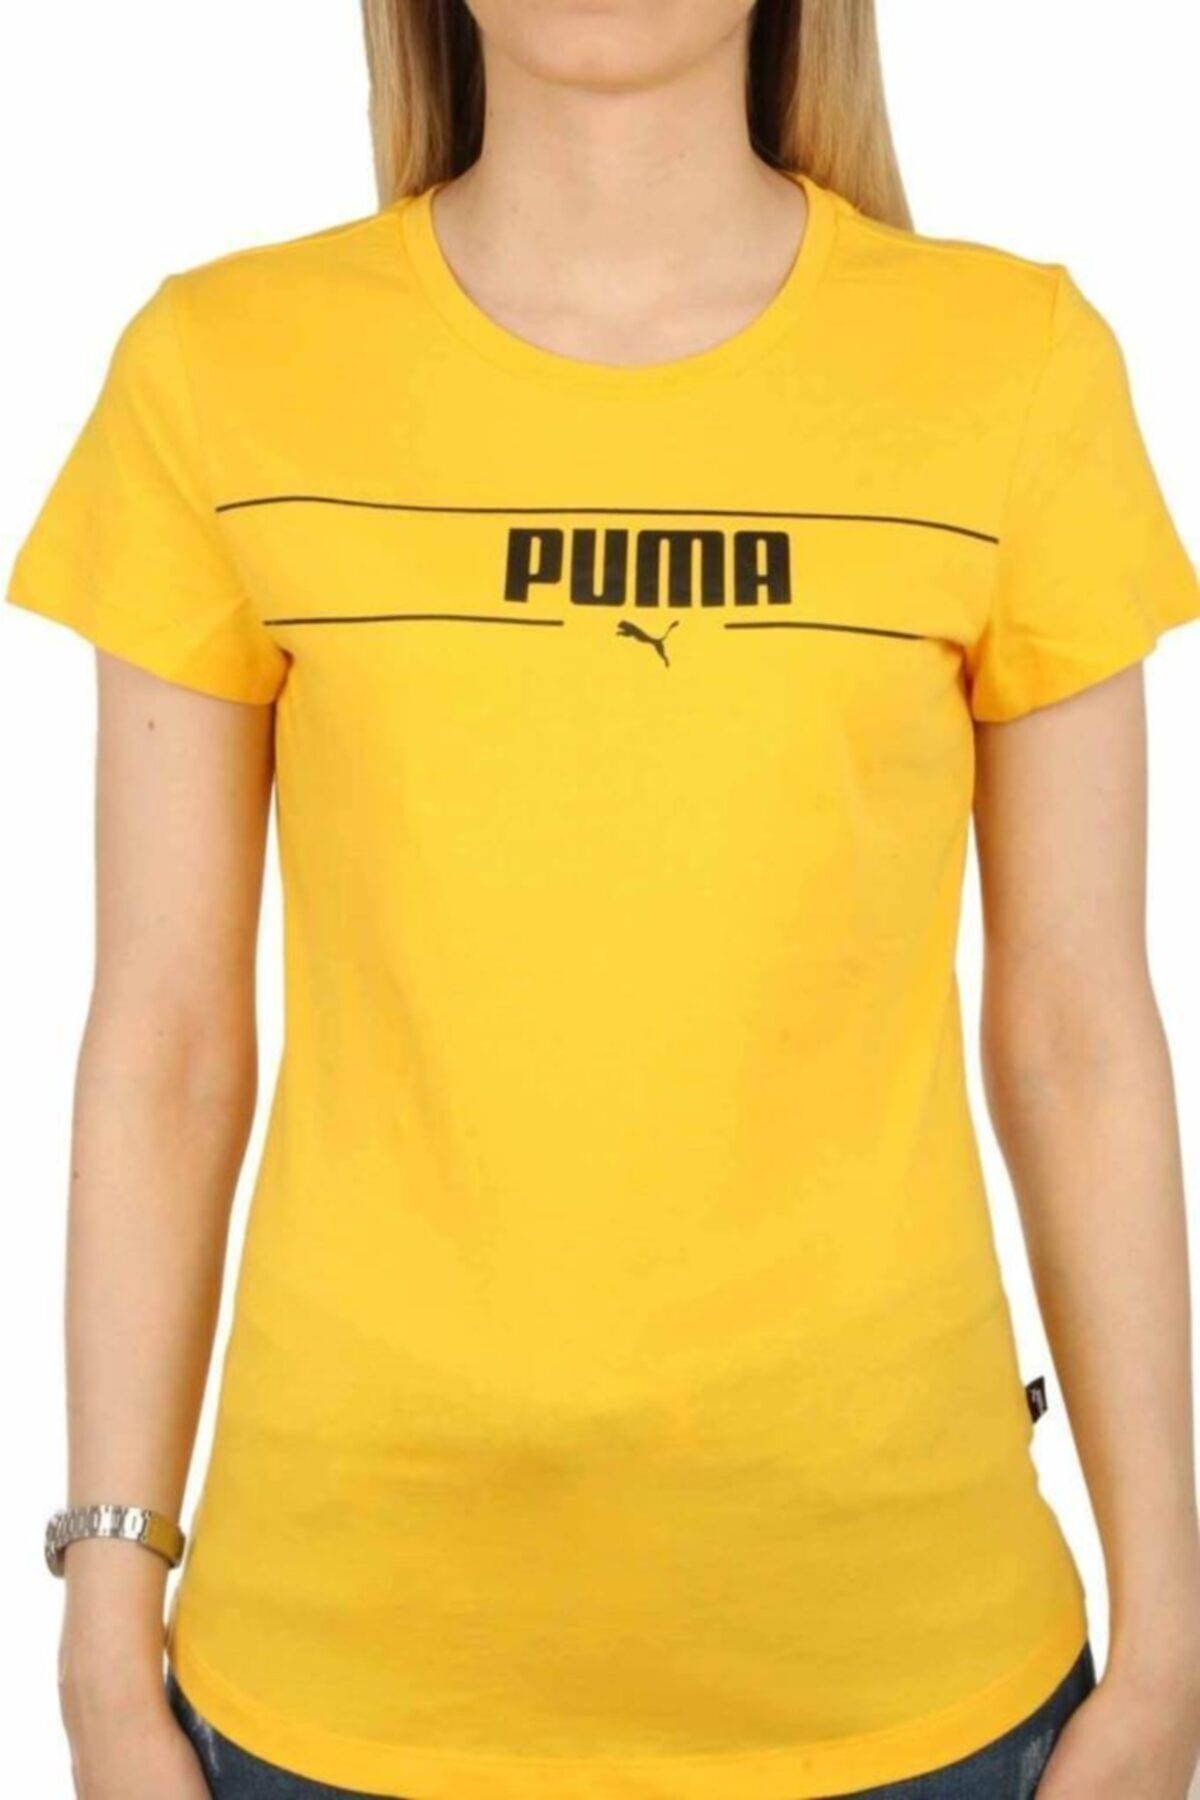 Puma BPPO-002529 Women's Tee